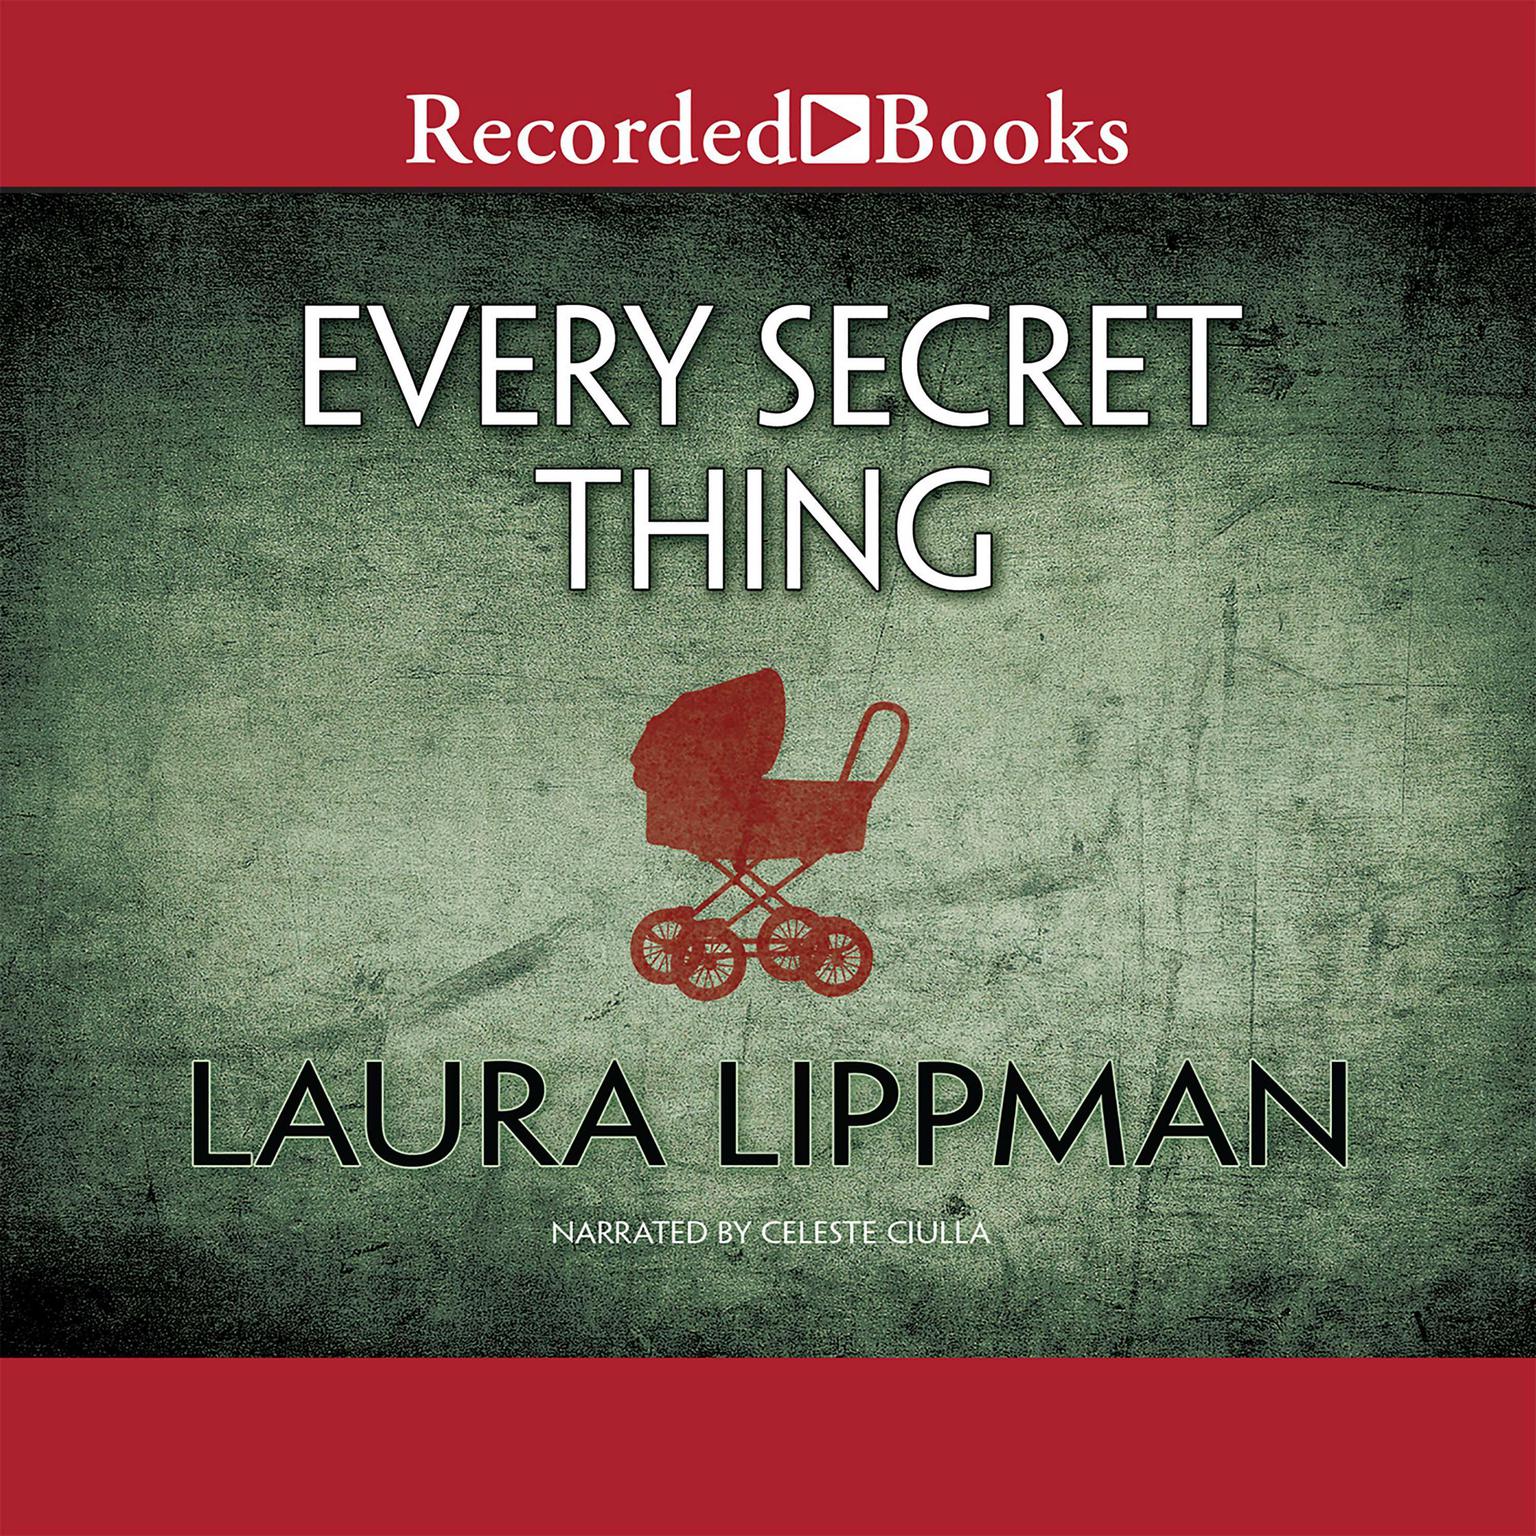 Every Secret Thing Audiobook, by Ann Tatlock